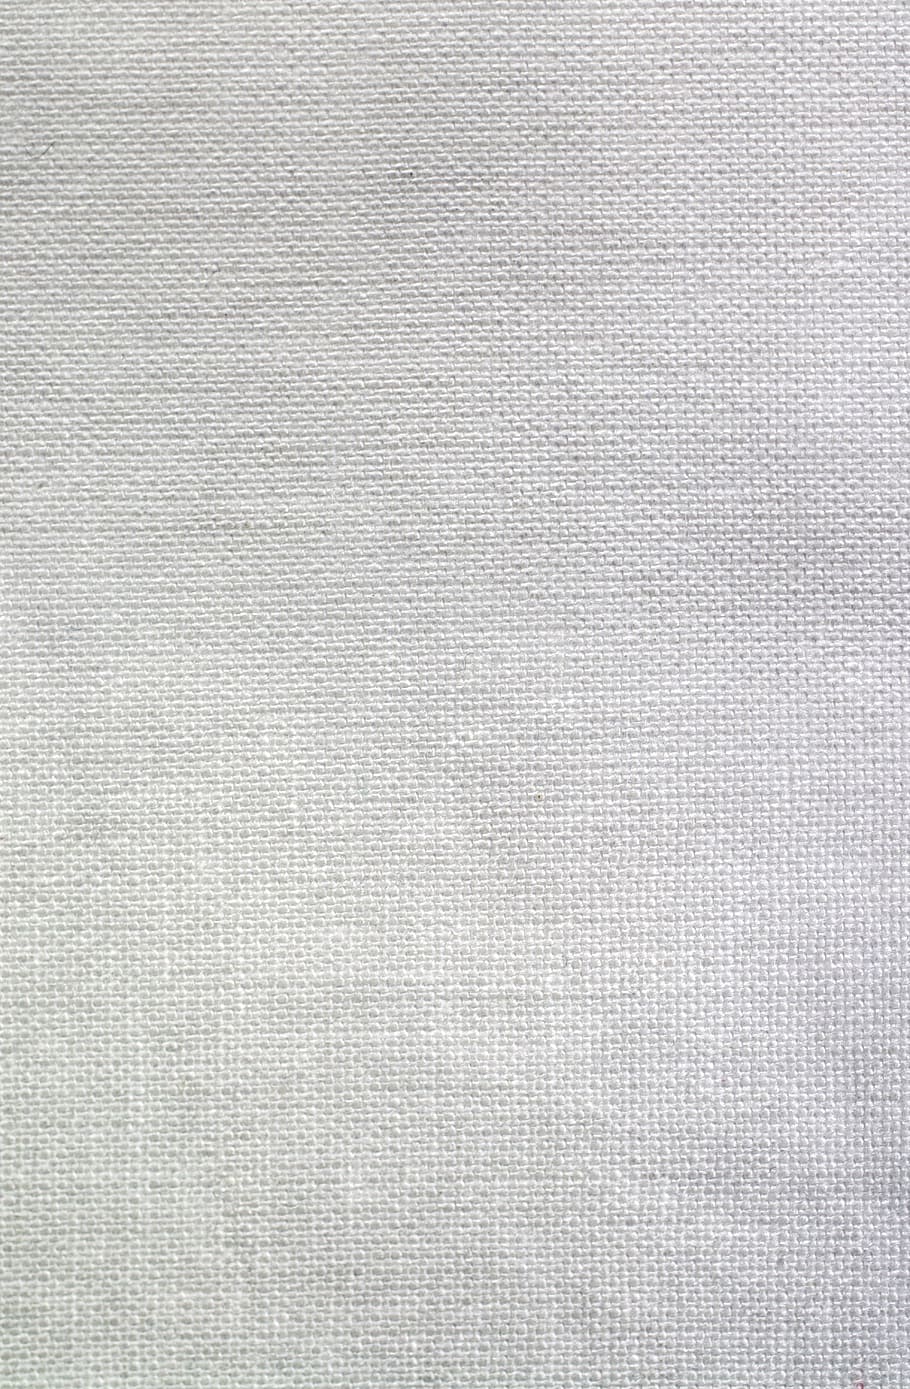 cinza têxtil, lona, ​​tecido, textura, material, pano, algodão, têxtil, superfície, texturizado